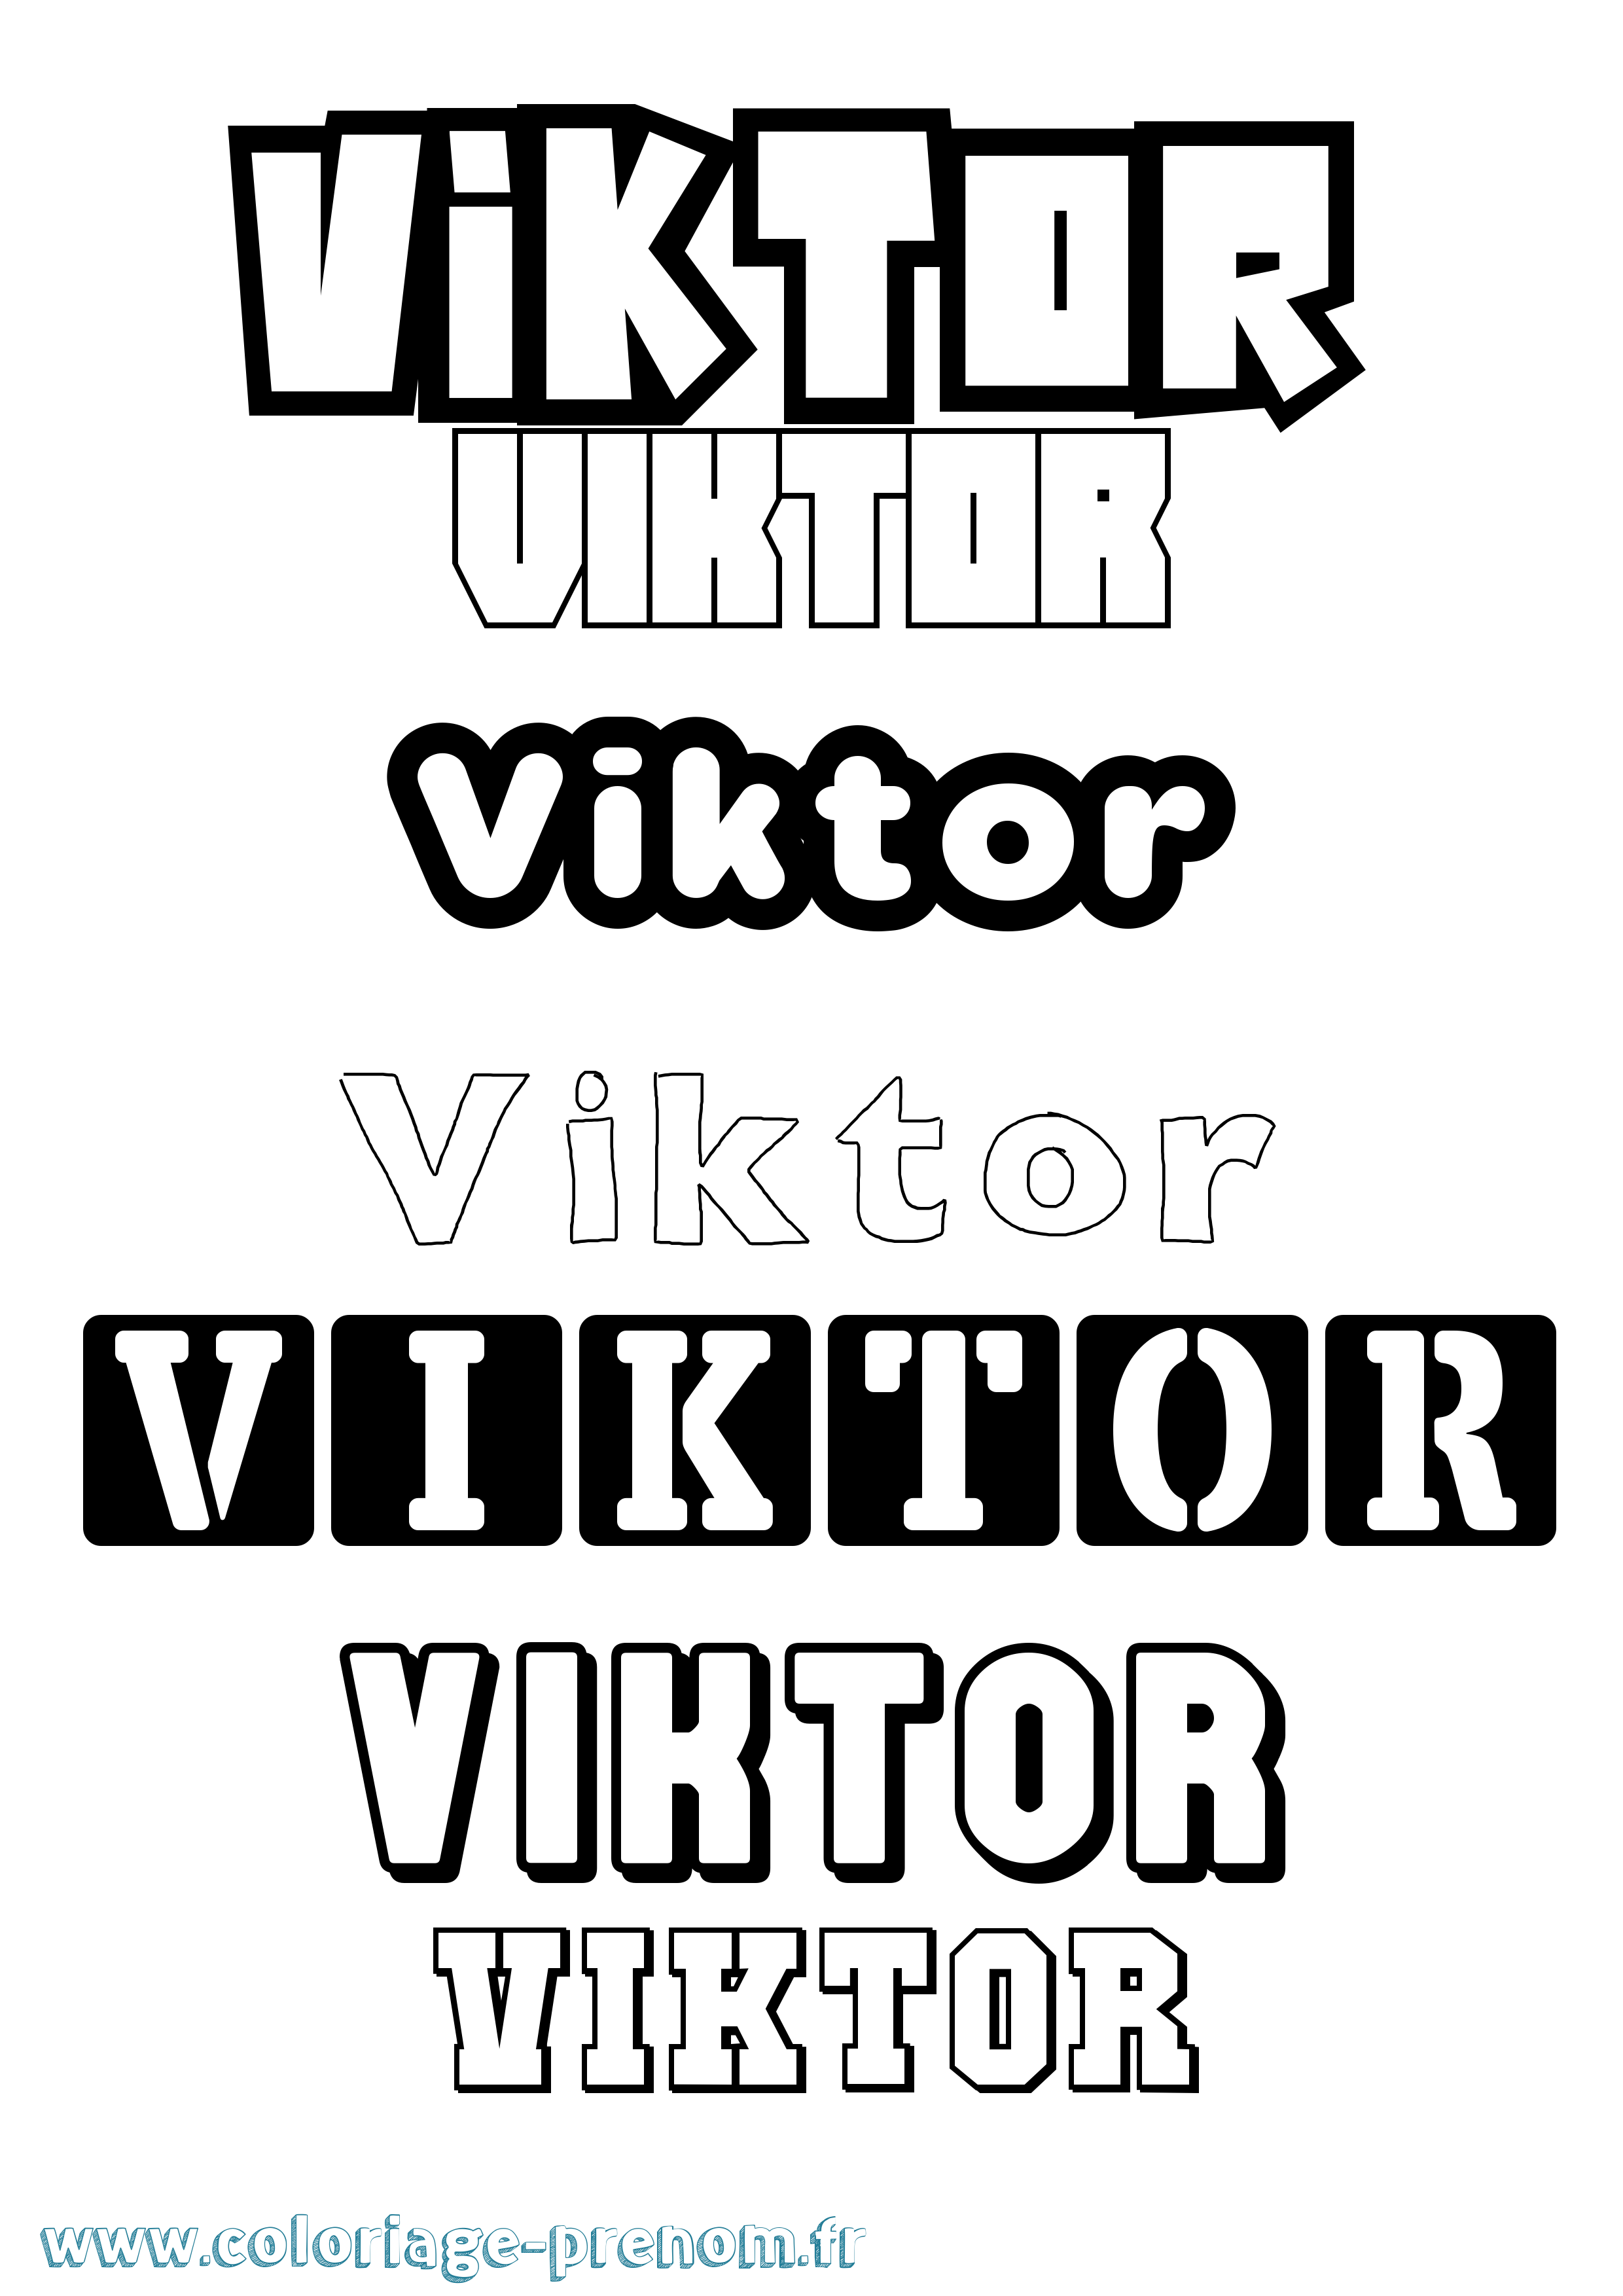 Coloriage prénom Viktor